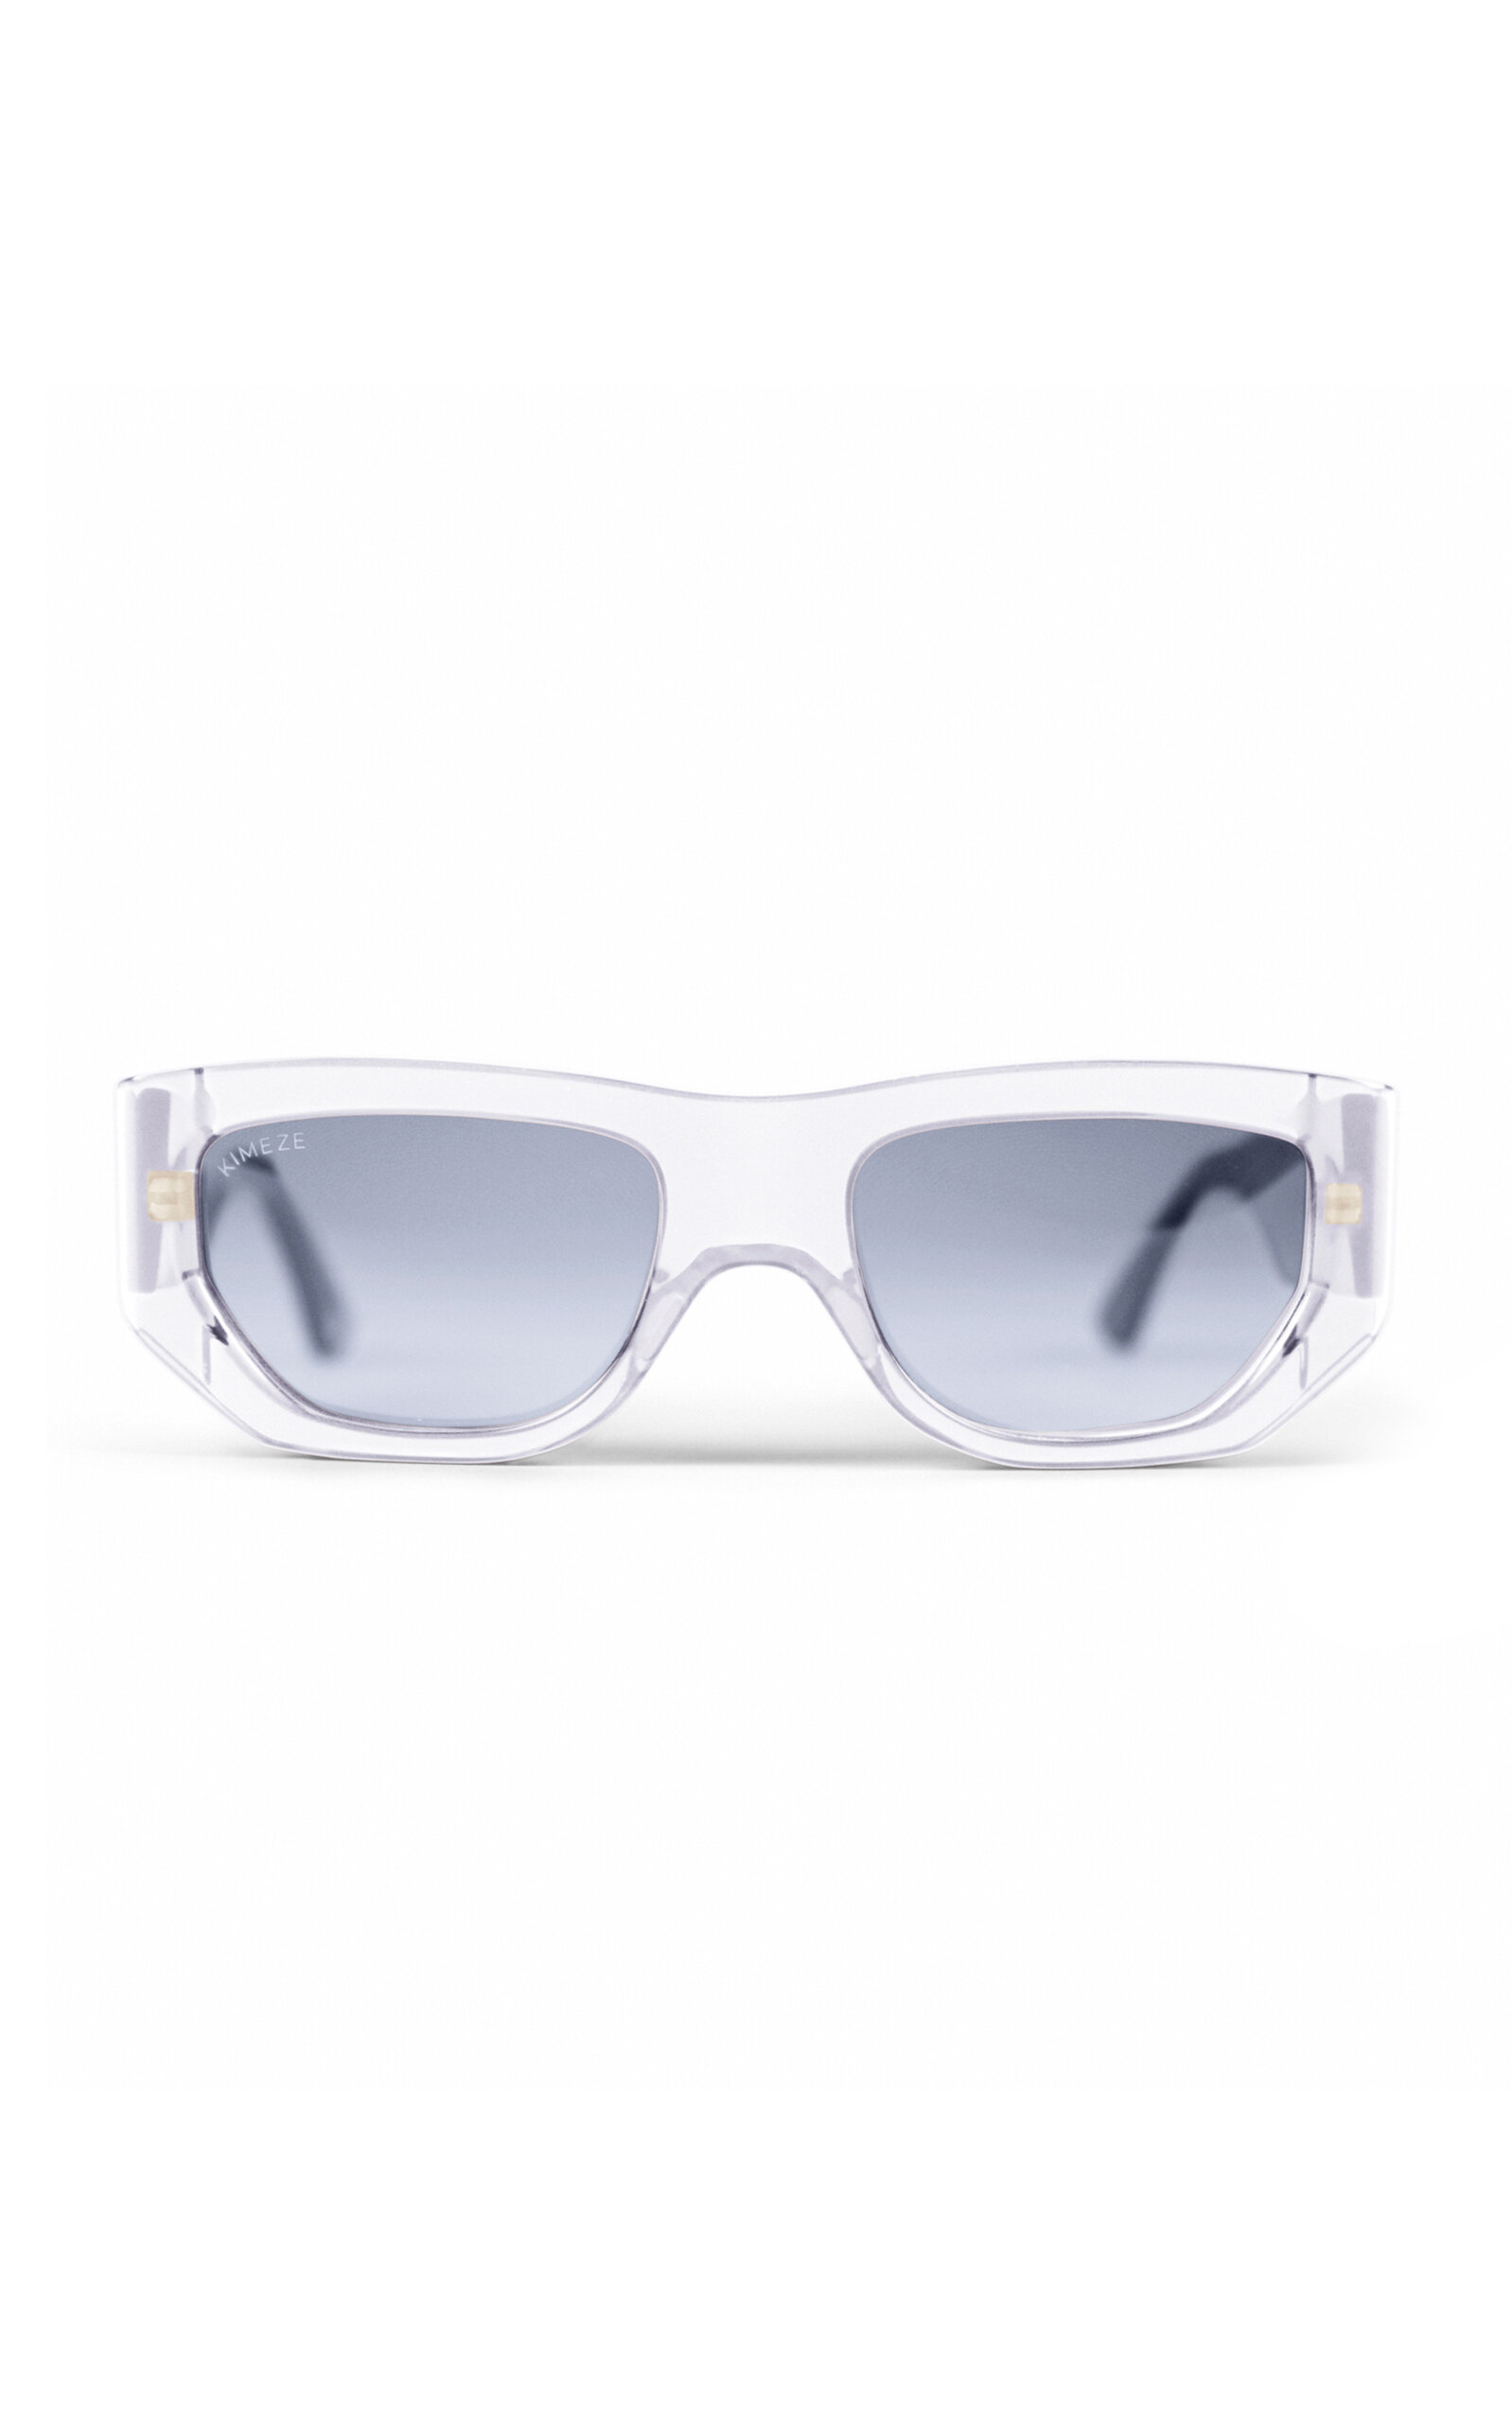 Kimeze Concept 1 D-frame Acetate Sunglasses In Clear